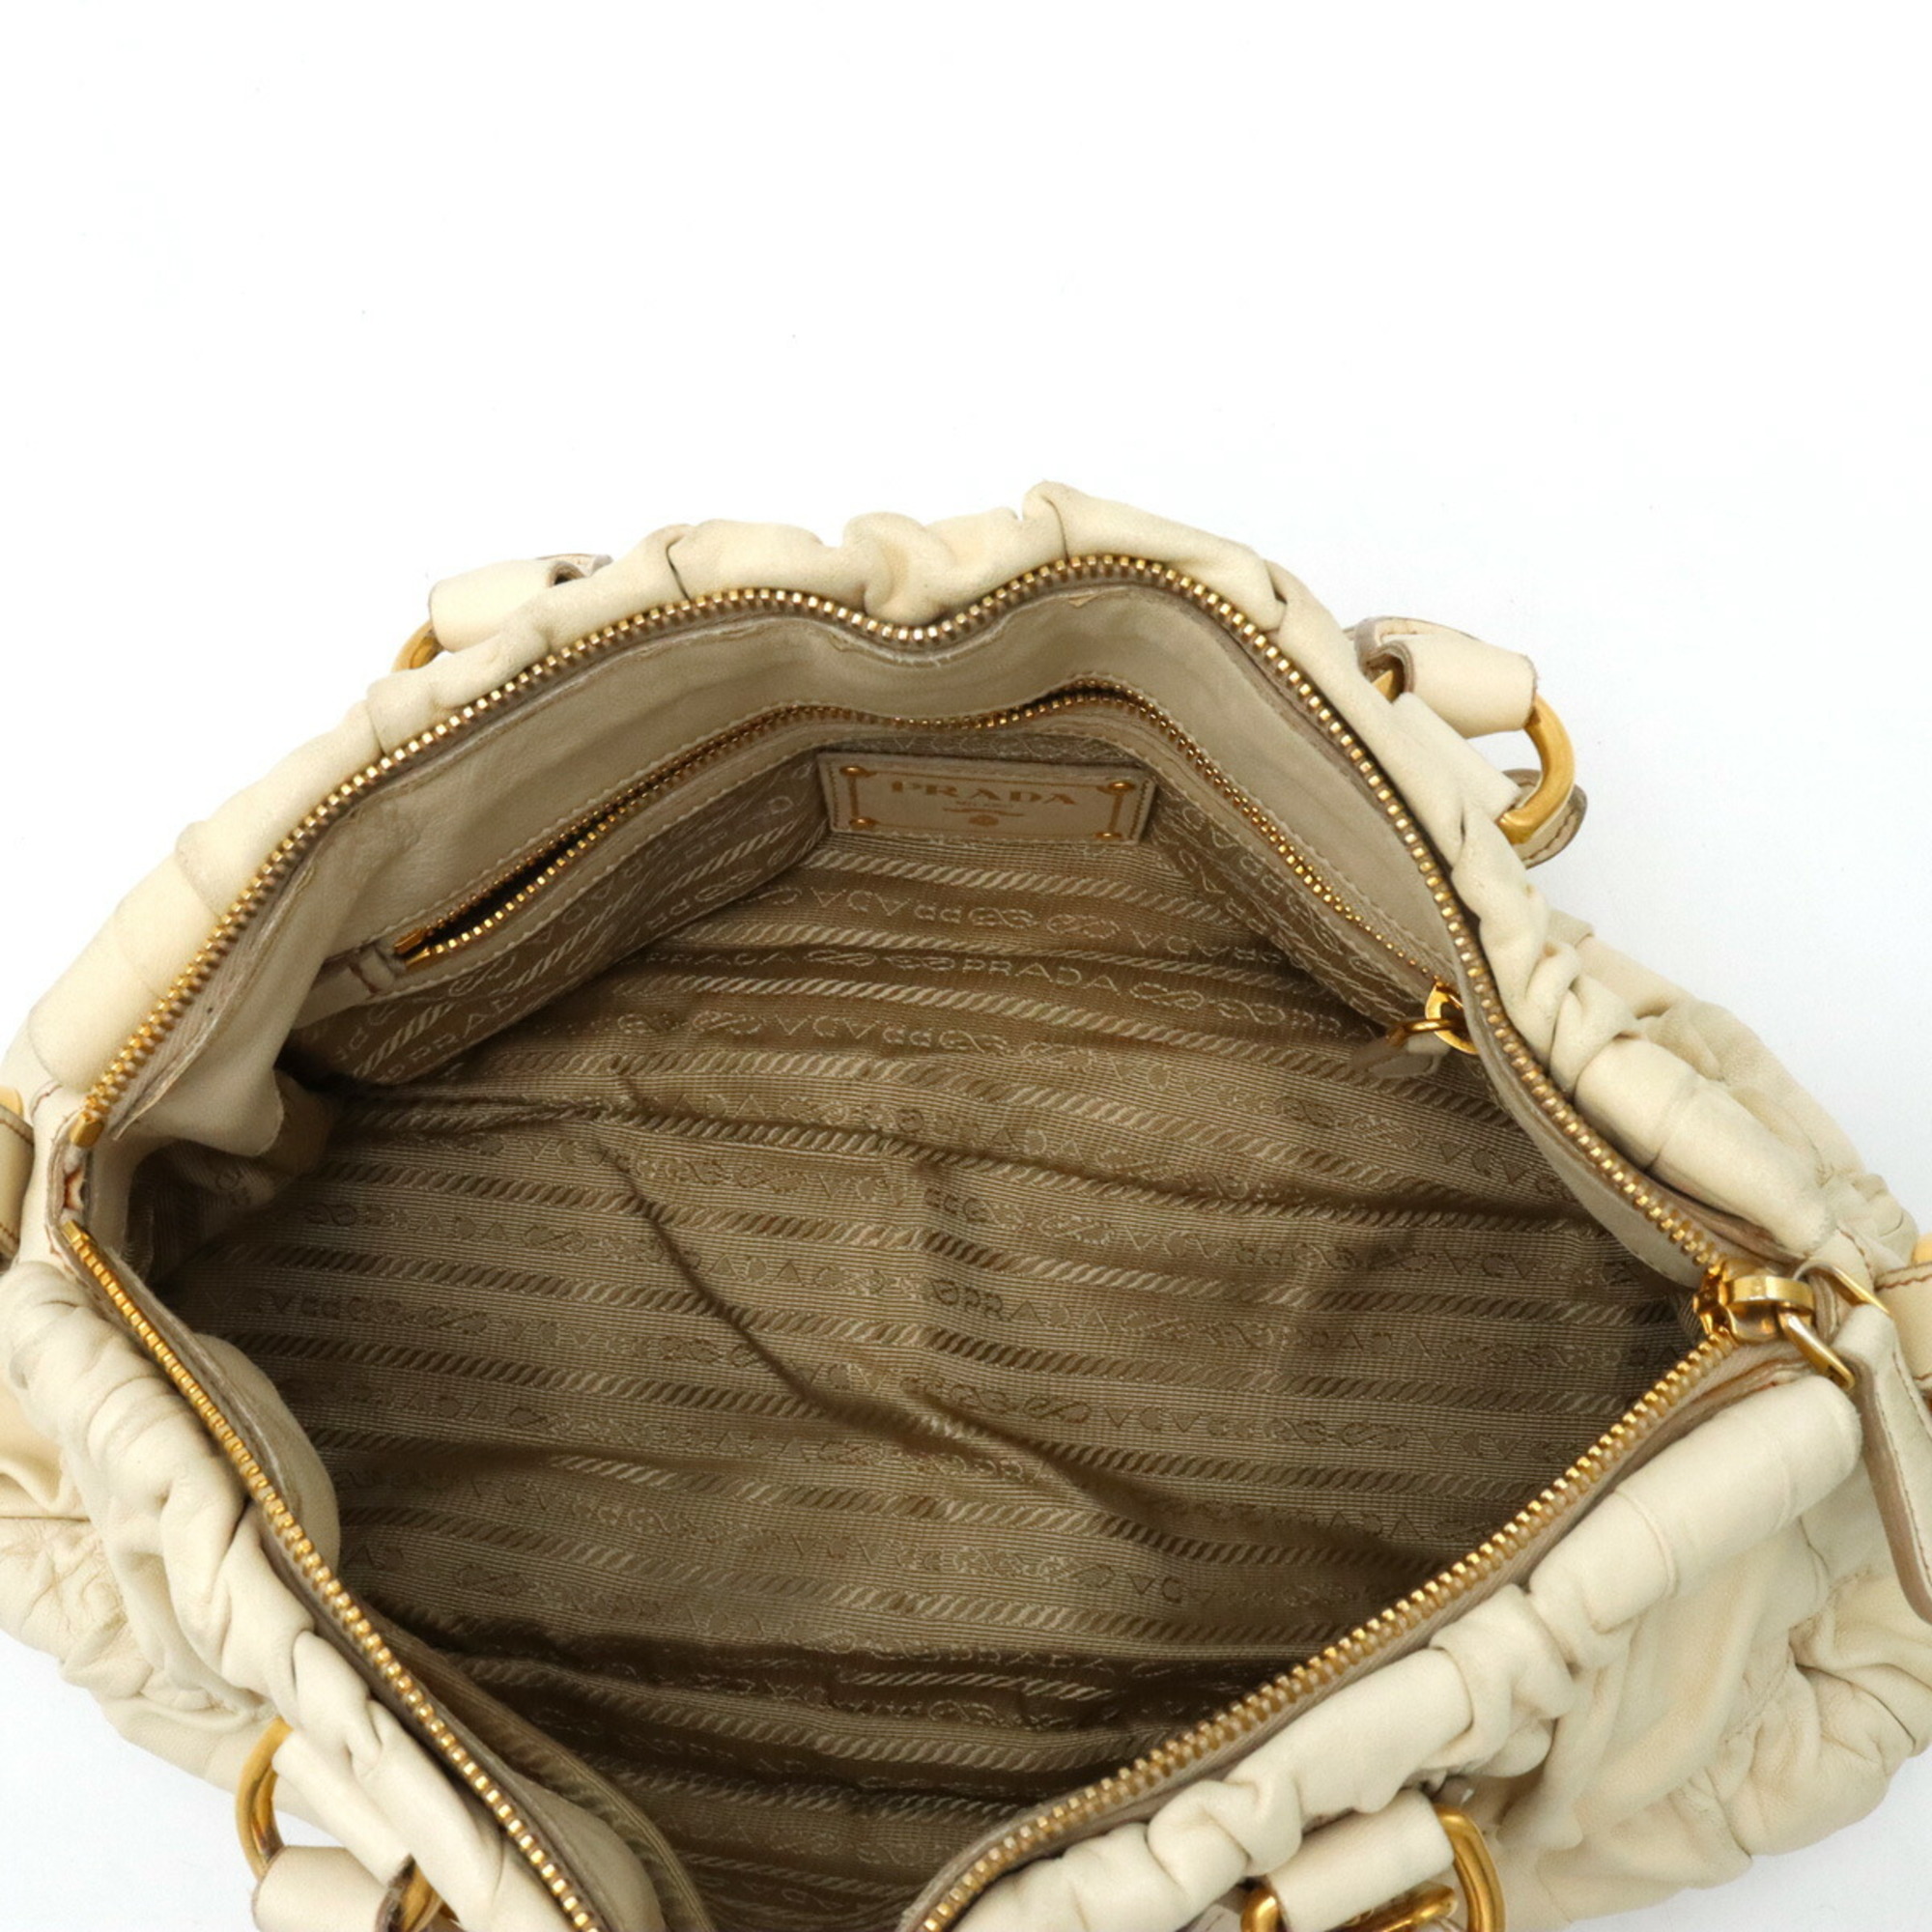 PRADA Prada gathered handbag shoulder bag leather ivory BN1407